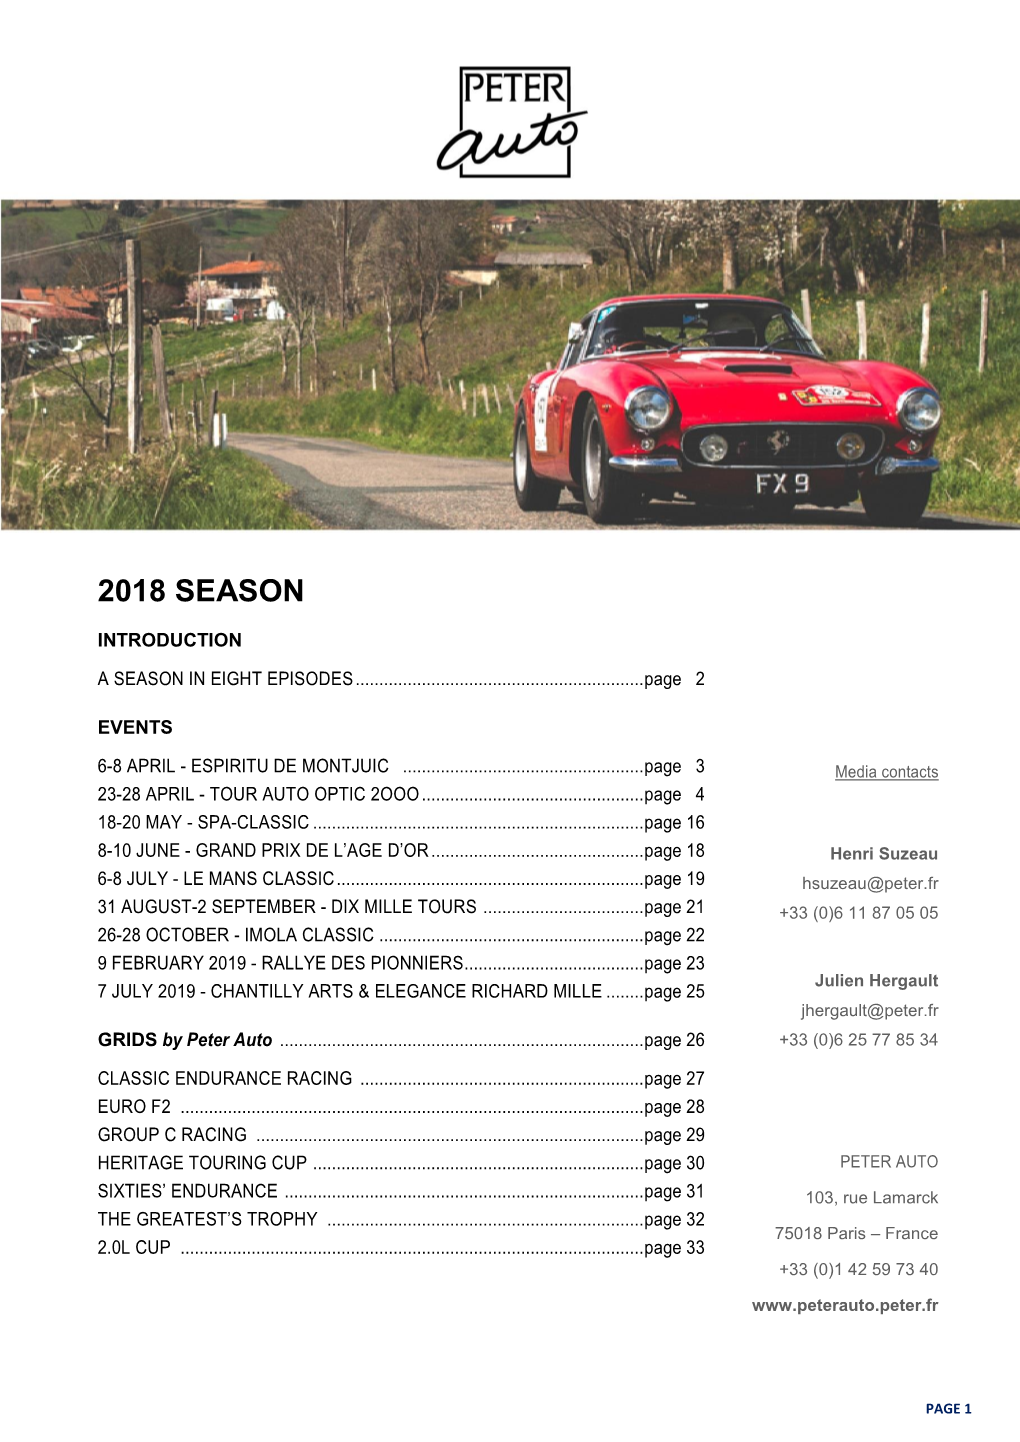 2018 Peter Auto Season